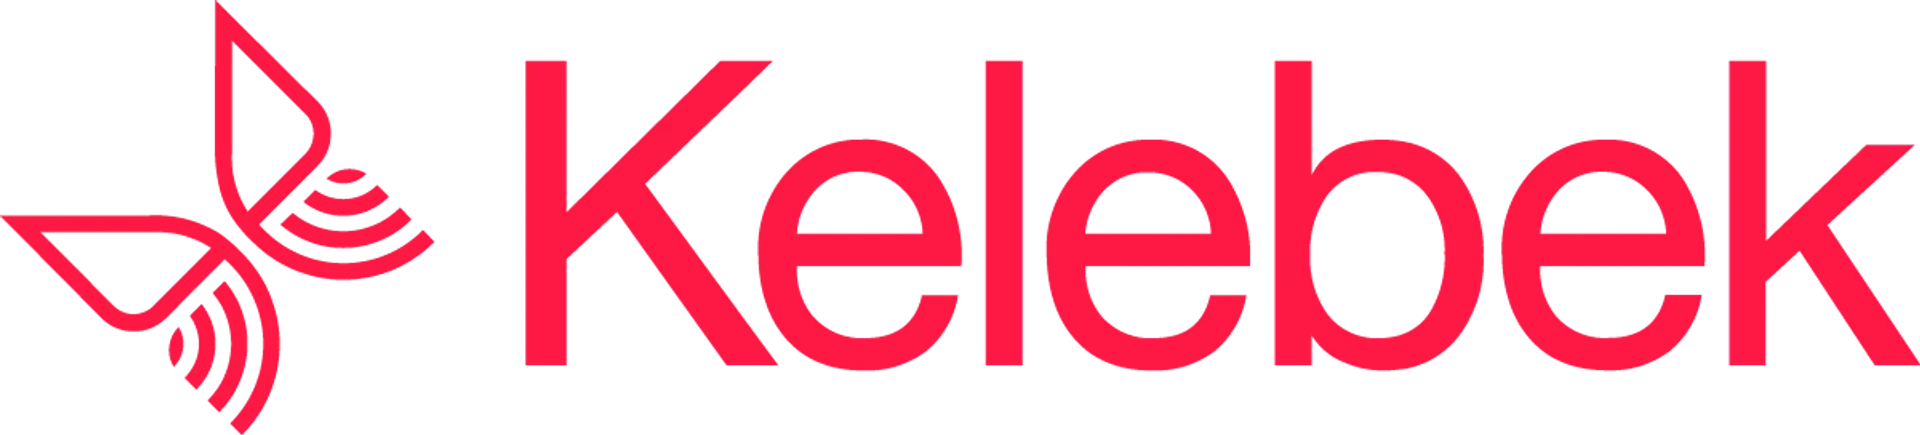 KELEBEK logo